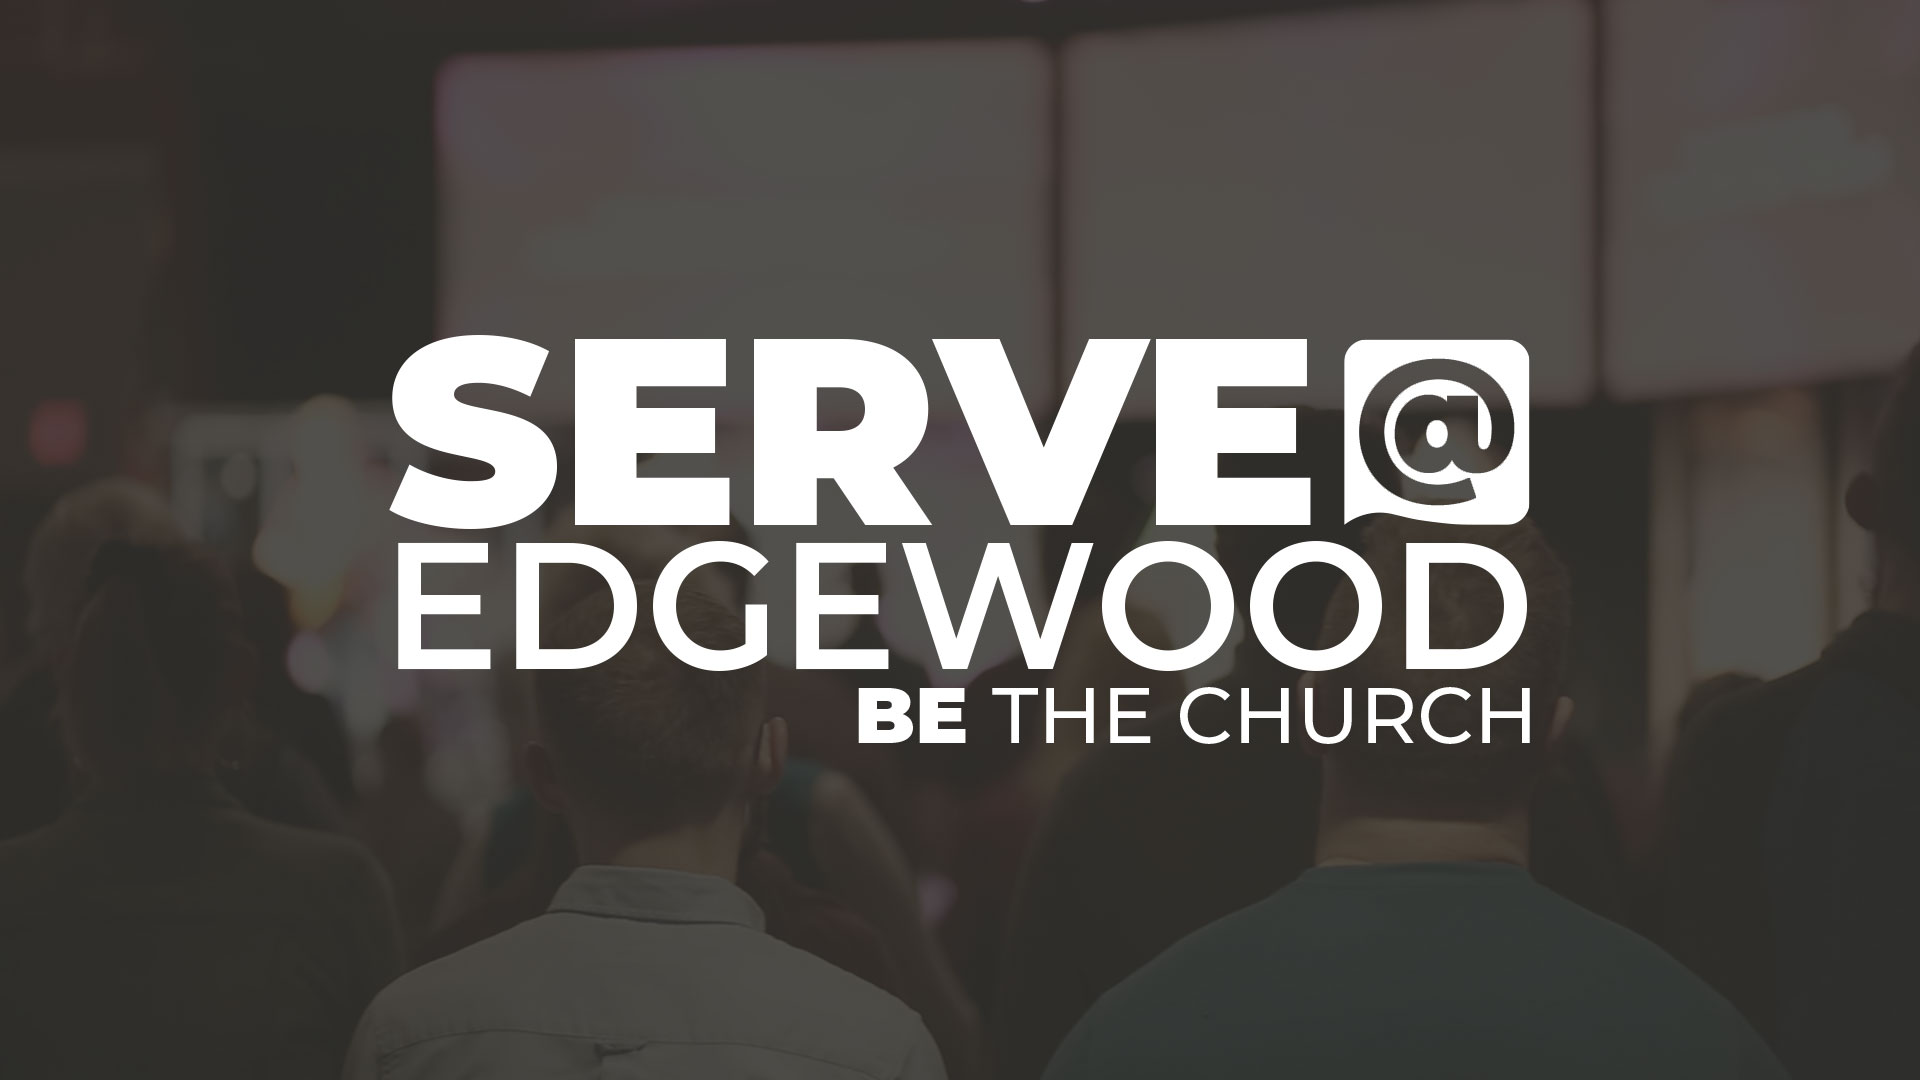 Serve @ Edgewood